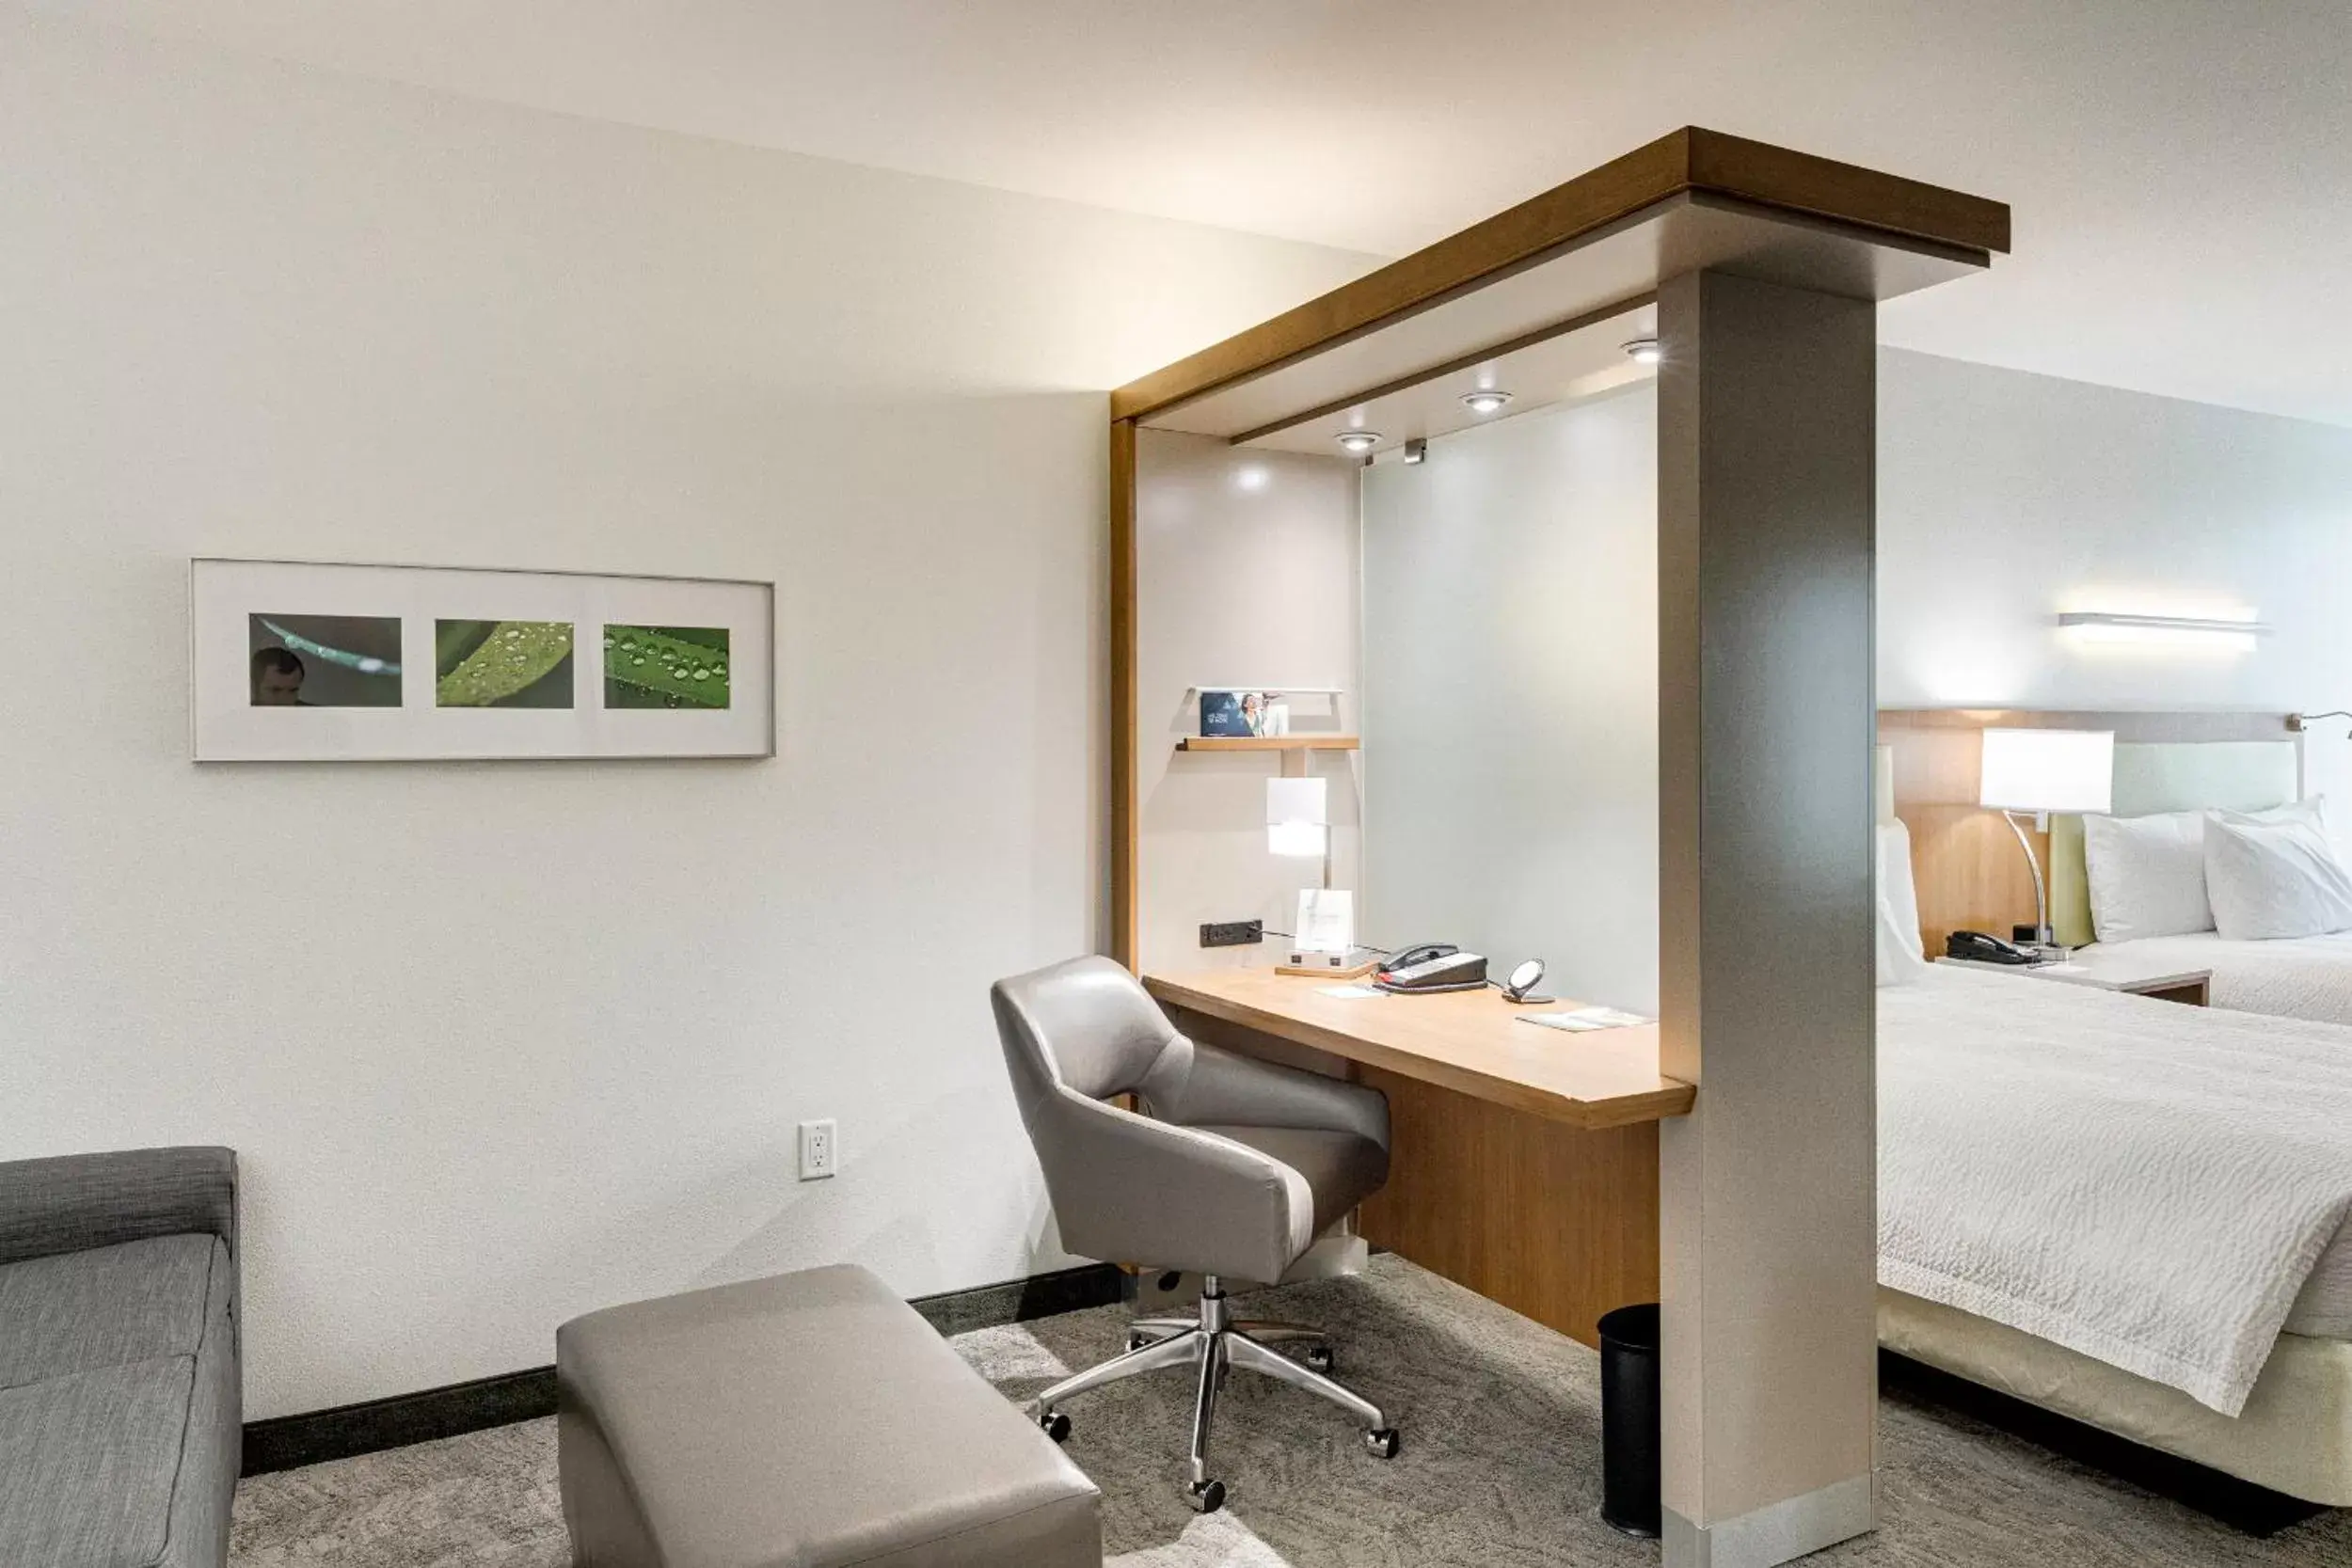 Bedroom, Bathroom in SpringHill Suites by Marriott Houston The Woodlands